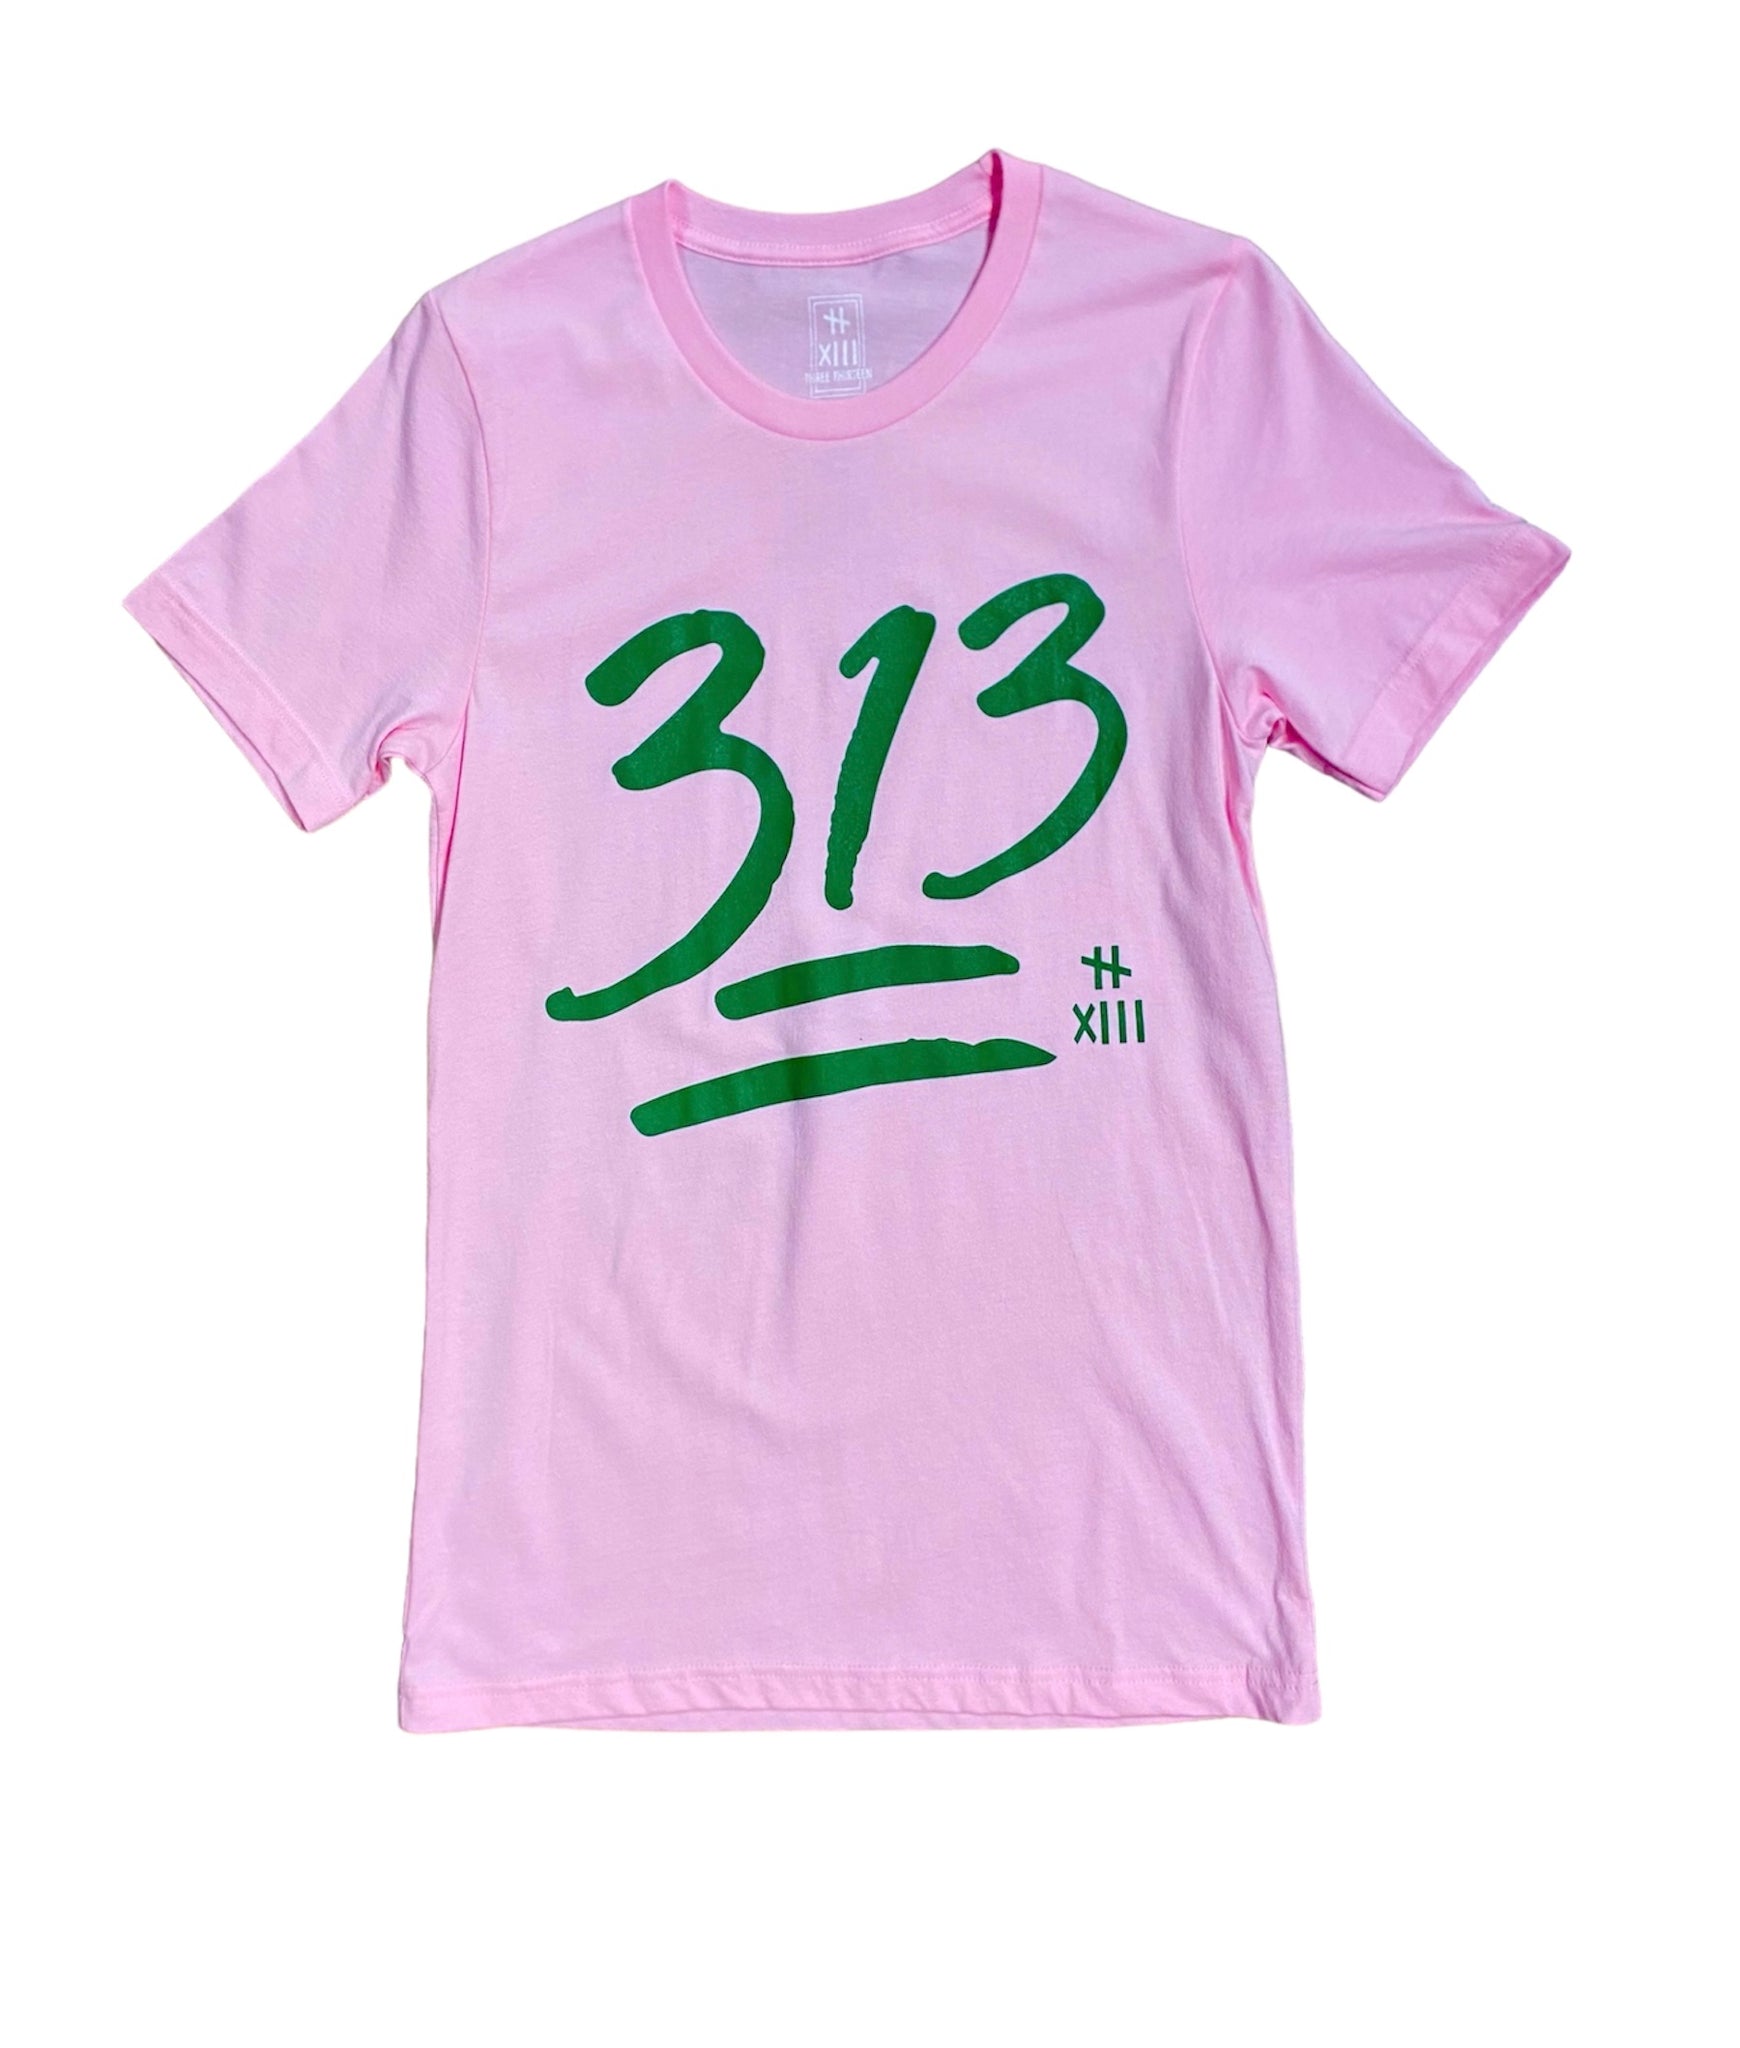 313 Tee Pink/Green